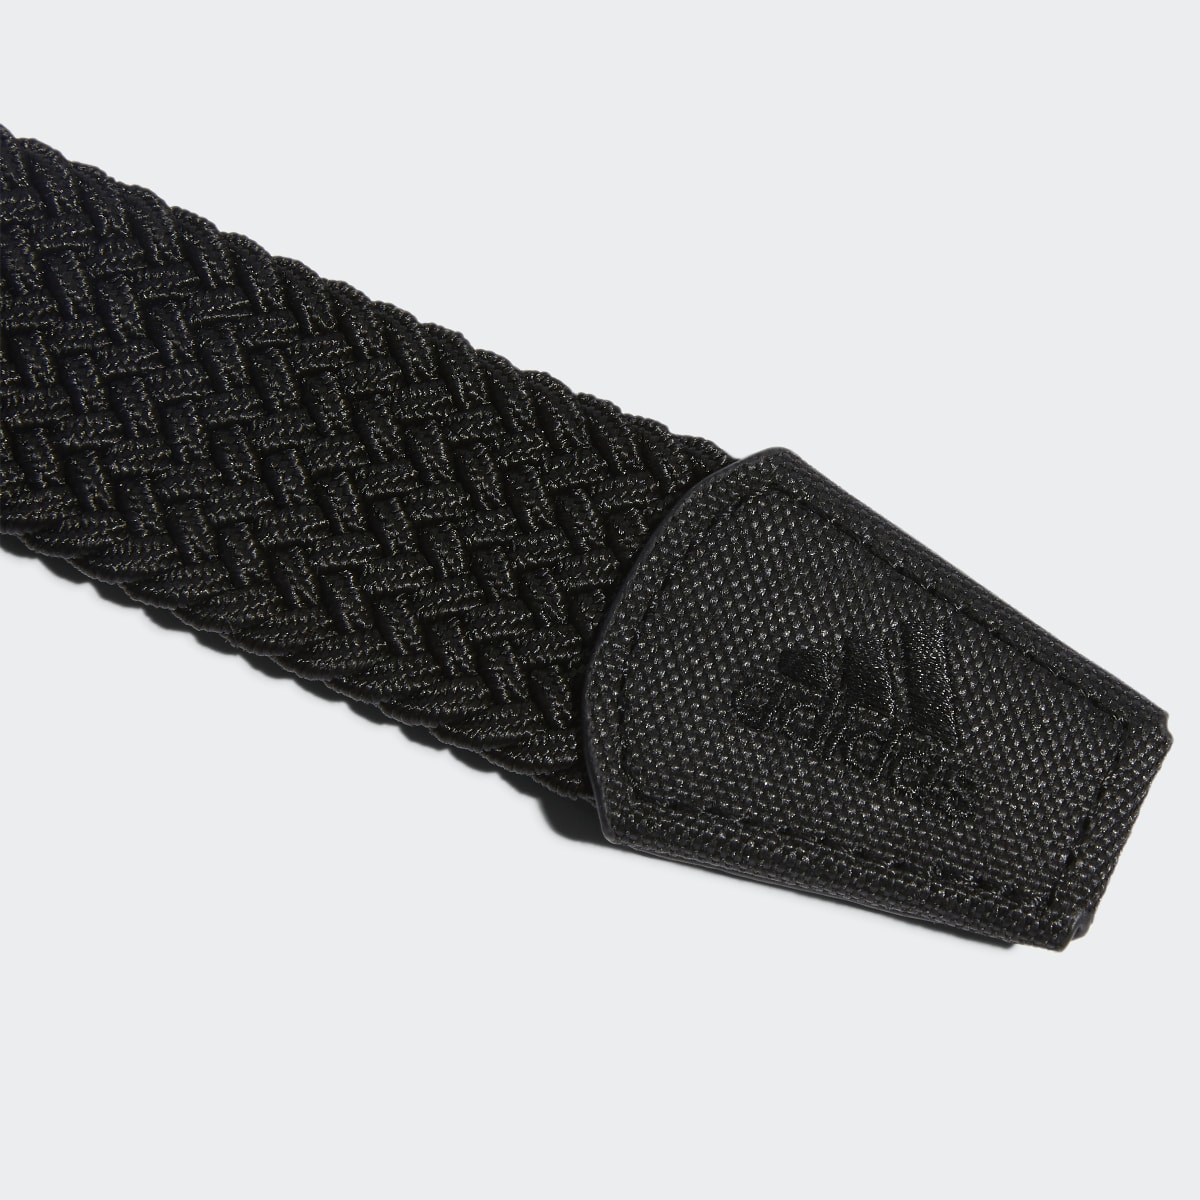 Adidas Men's Braided Stretch Belt. 4